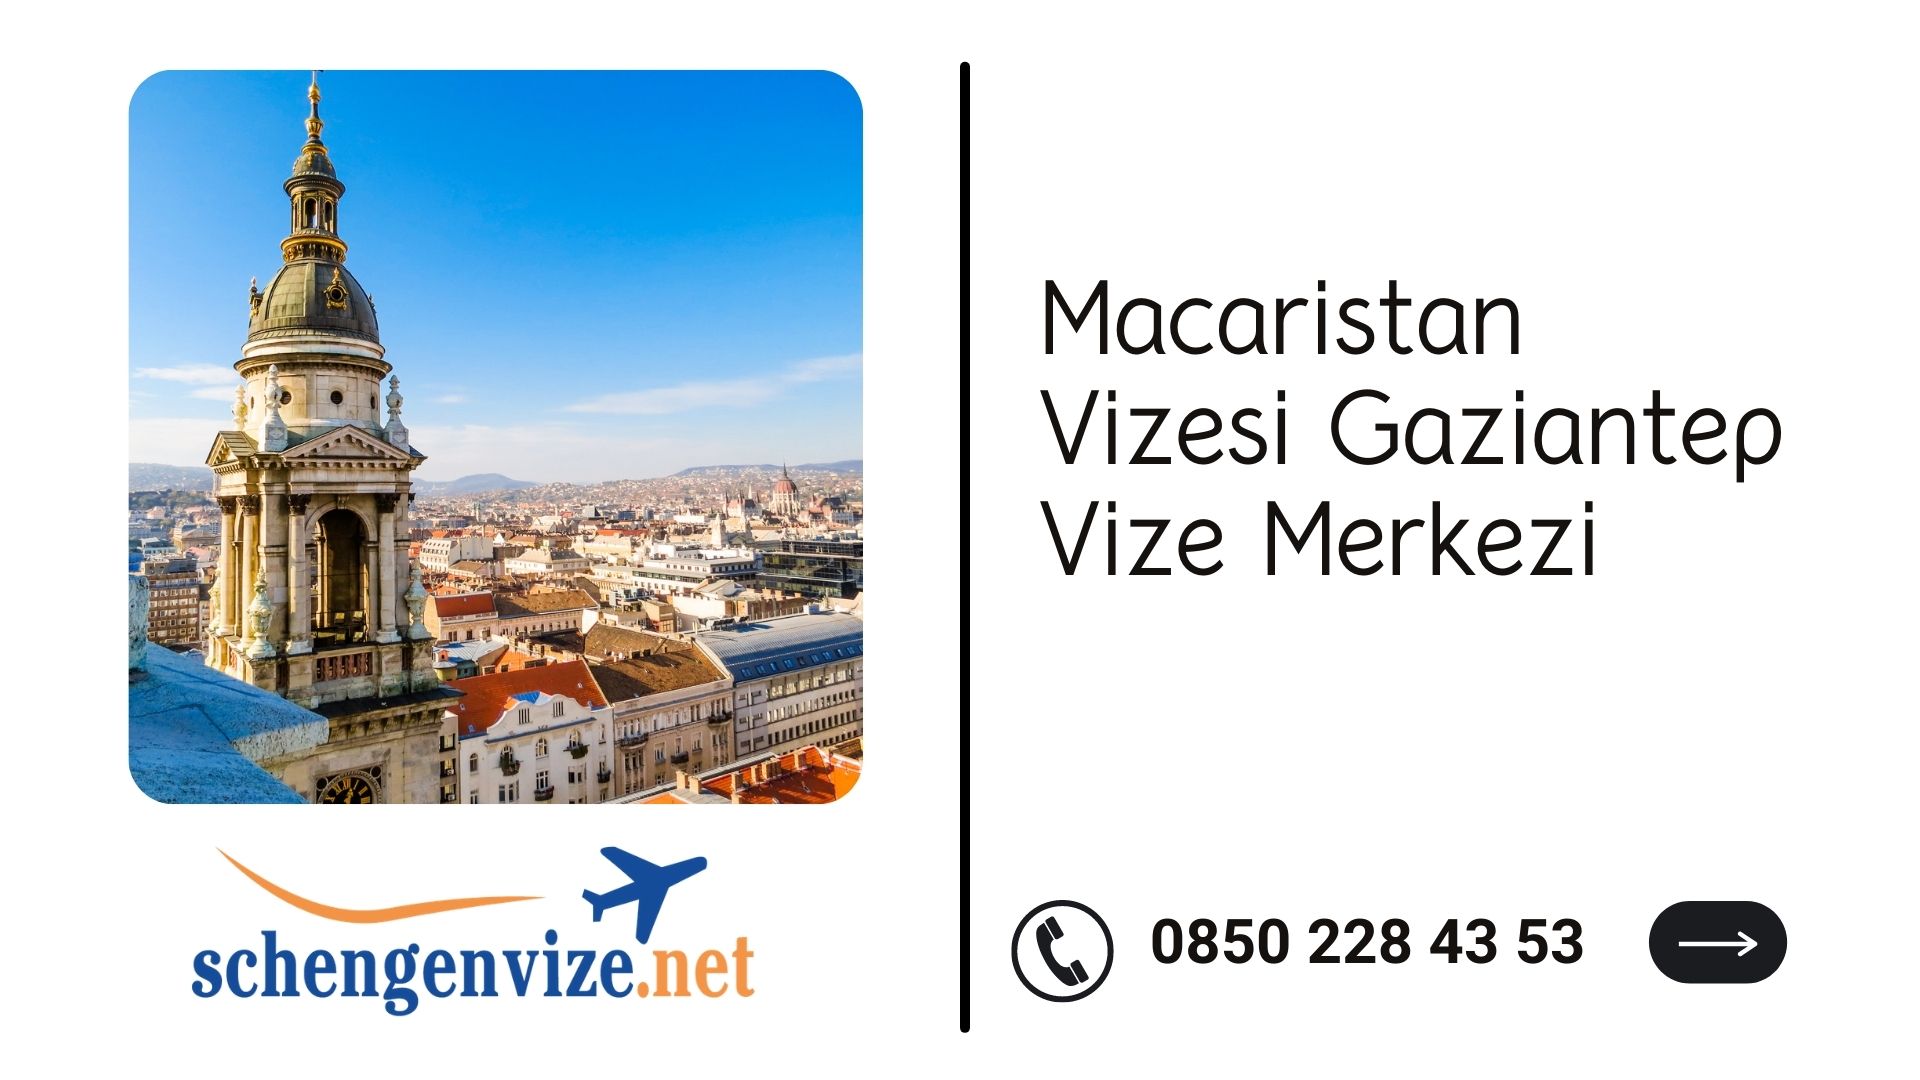 Macaristan Vizesi Gaziantep Vize Merkezi